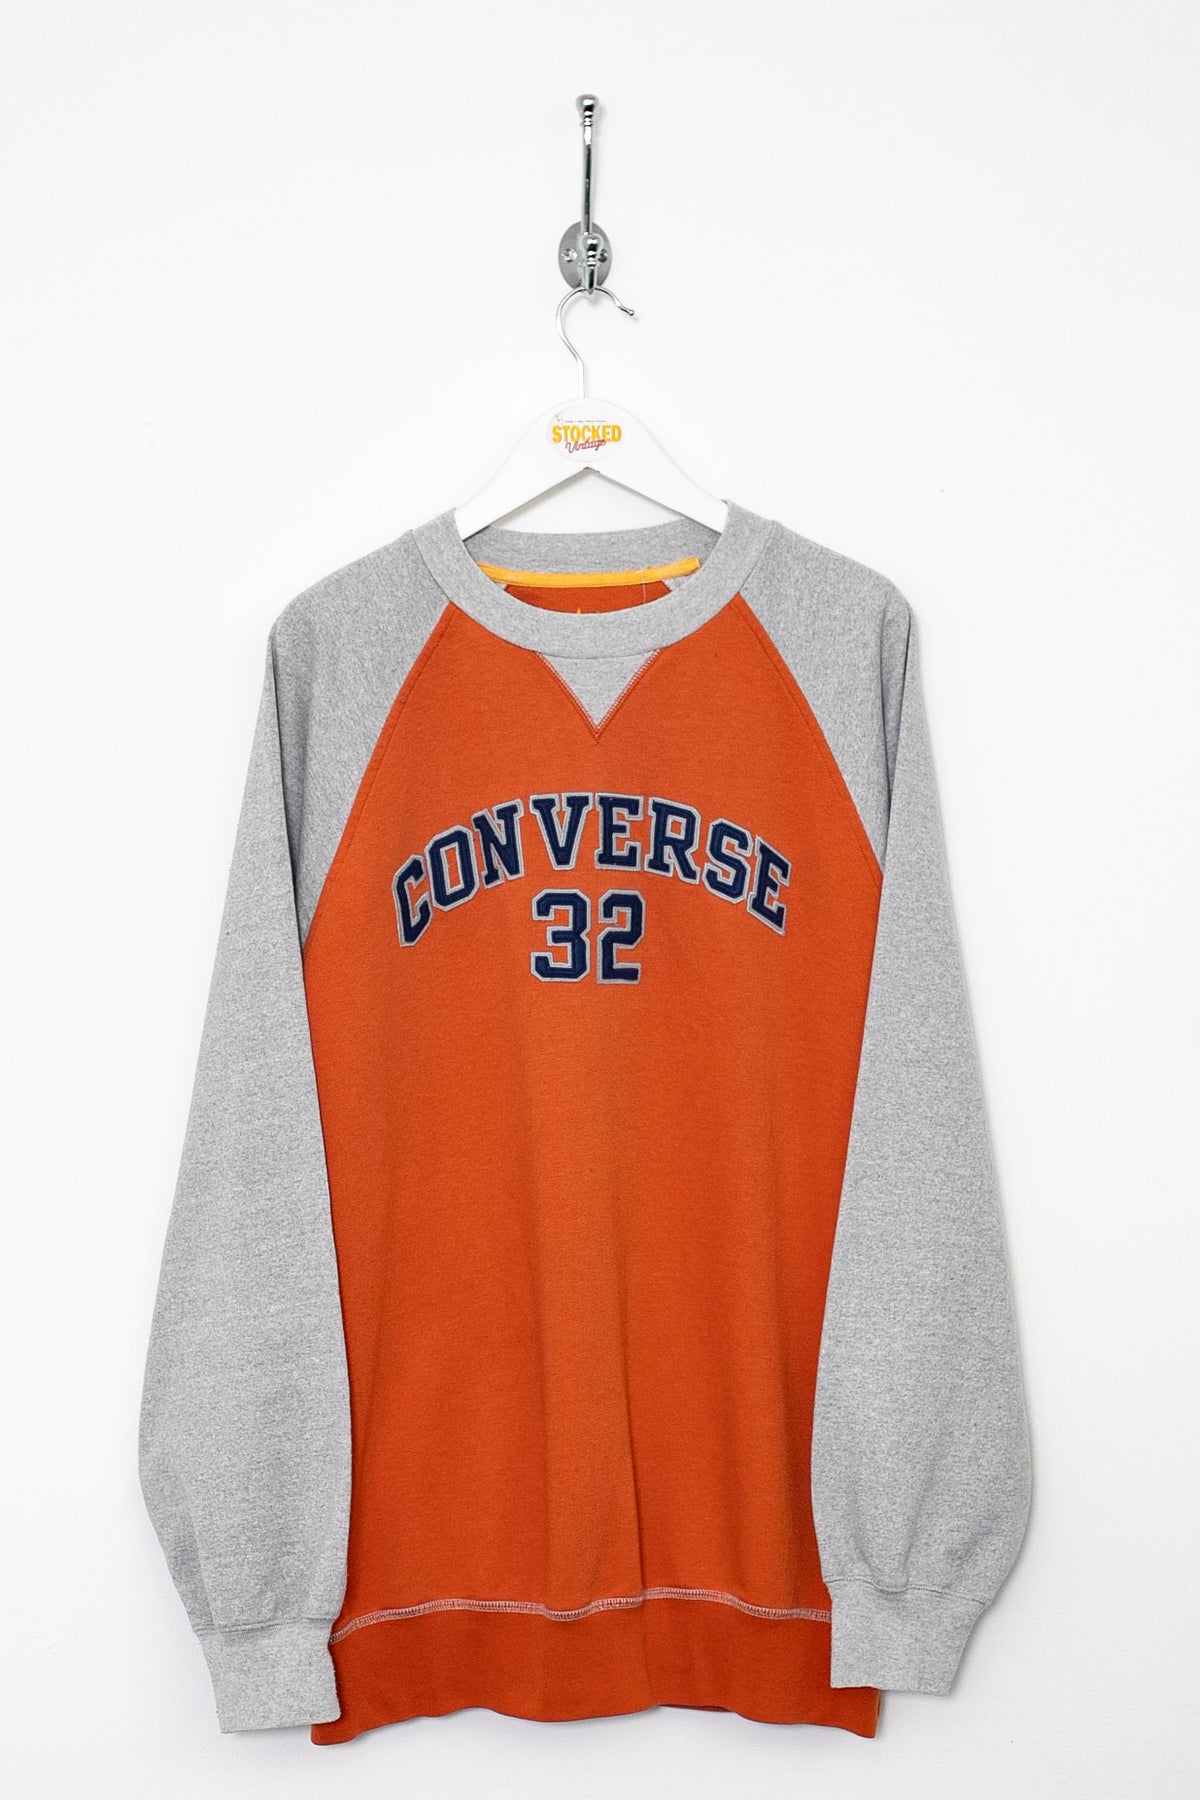 00s Converse Sweatshirt (L)